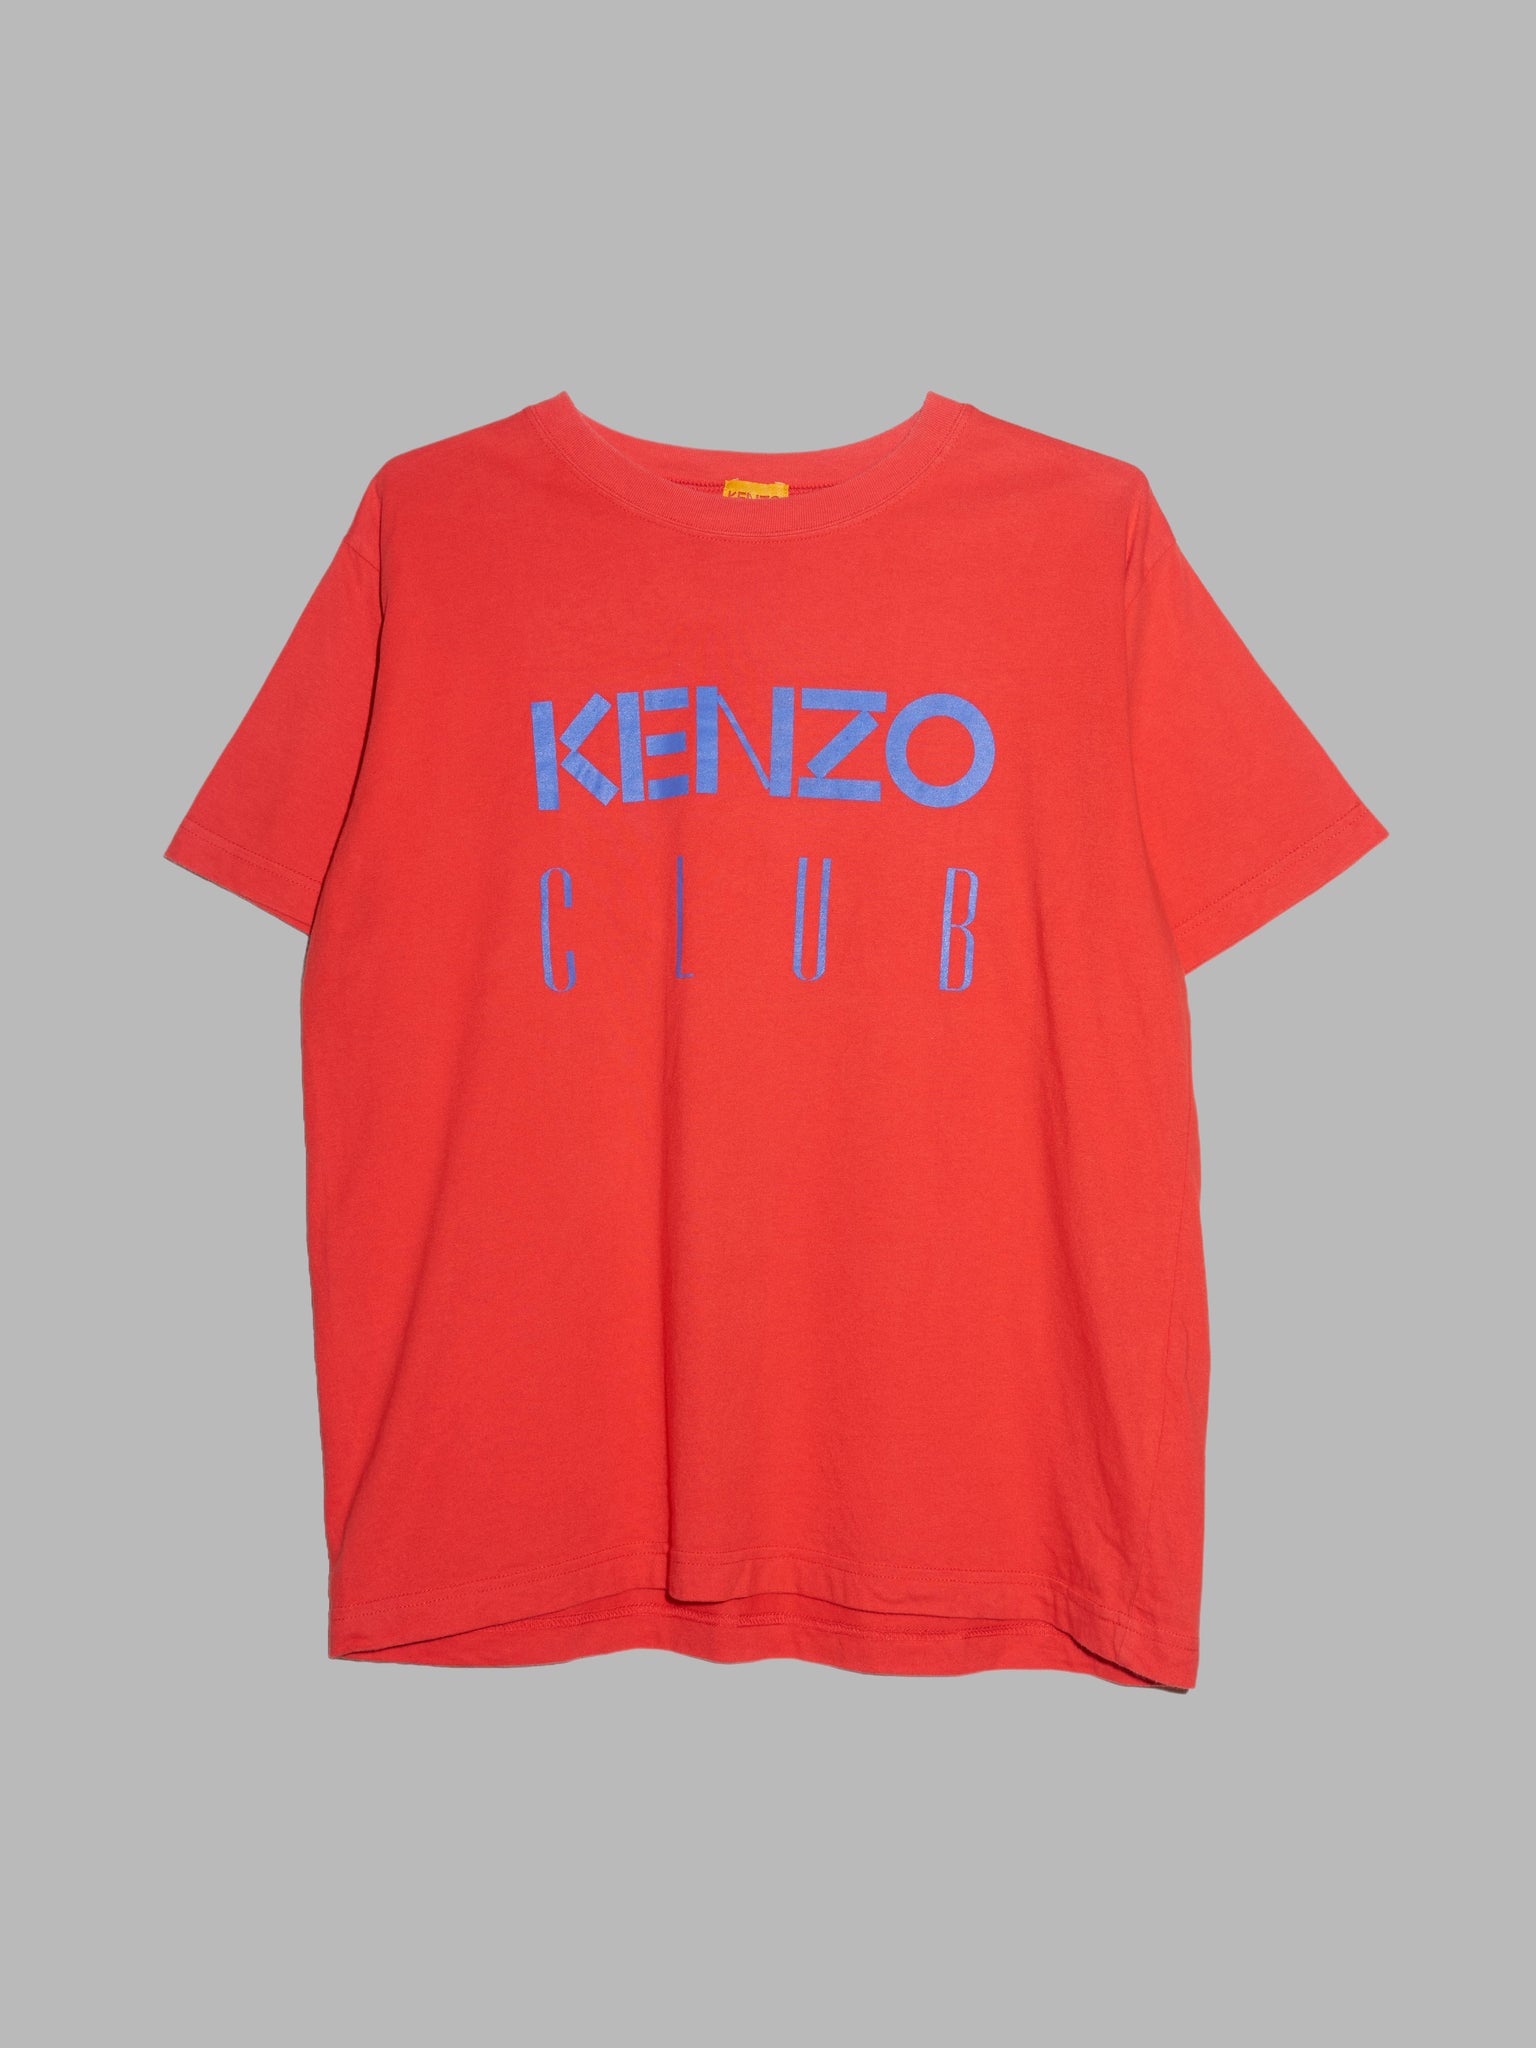 Kenzo Club 1990s orange cotton logo t-shirt